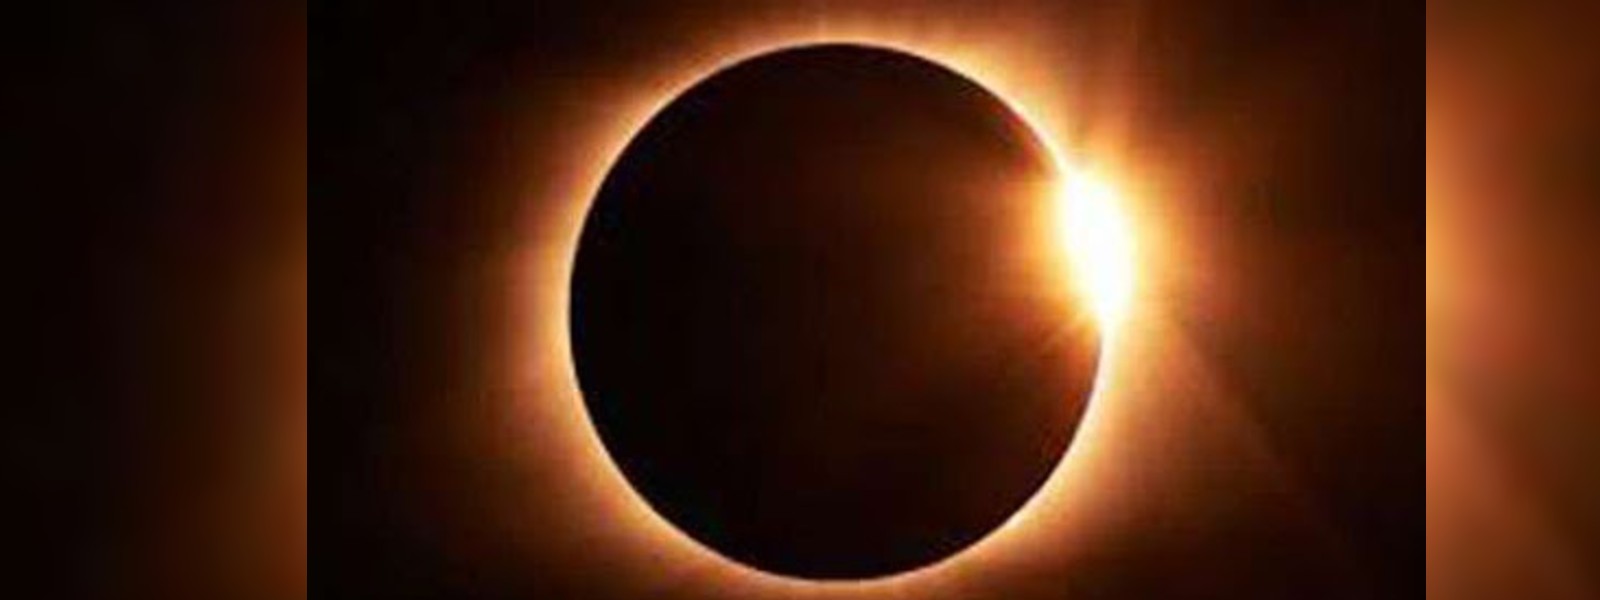 Partial solar eclipse in Sri Lanka on Sunday